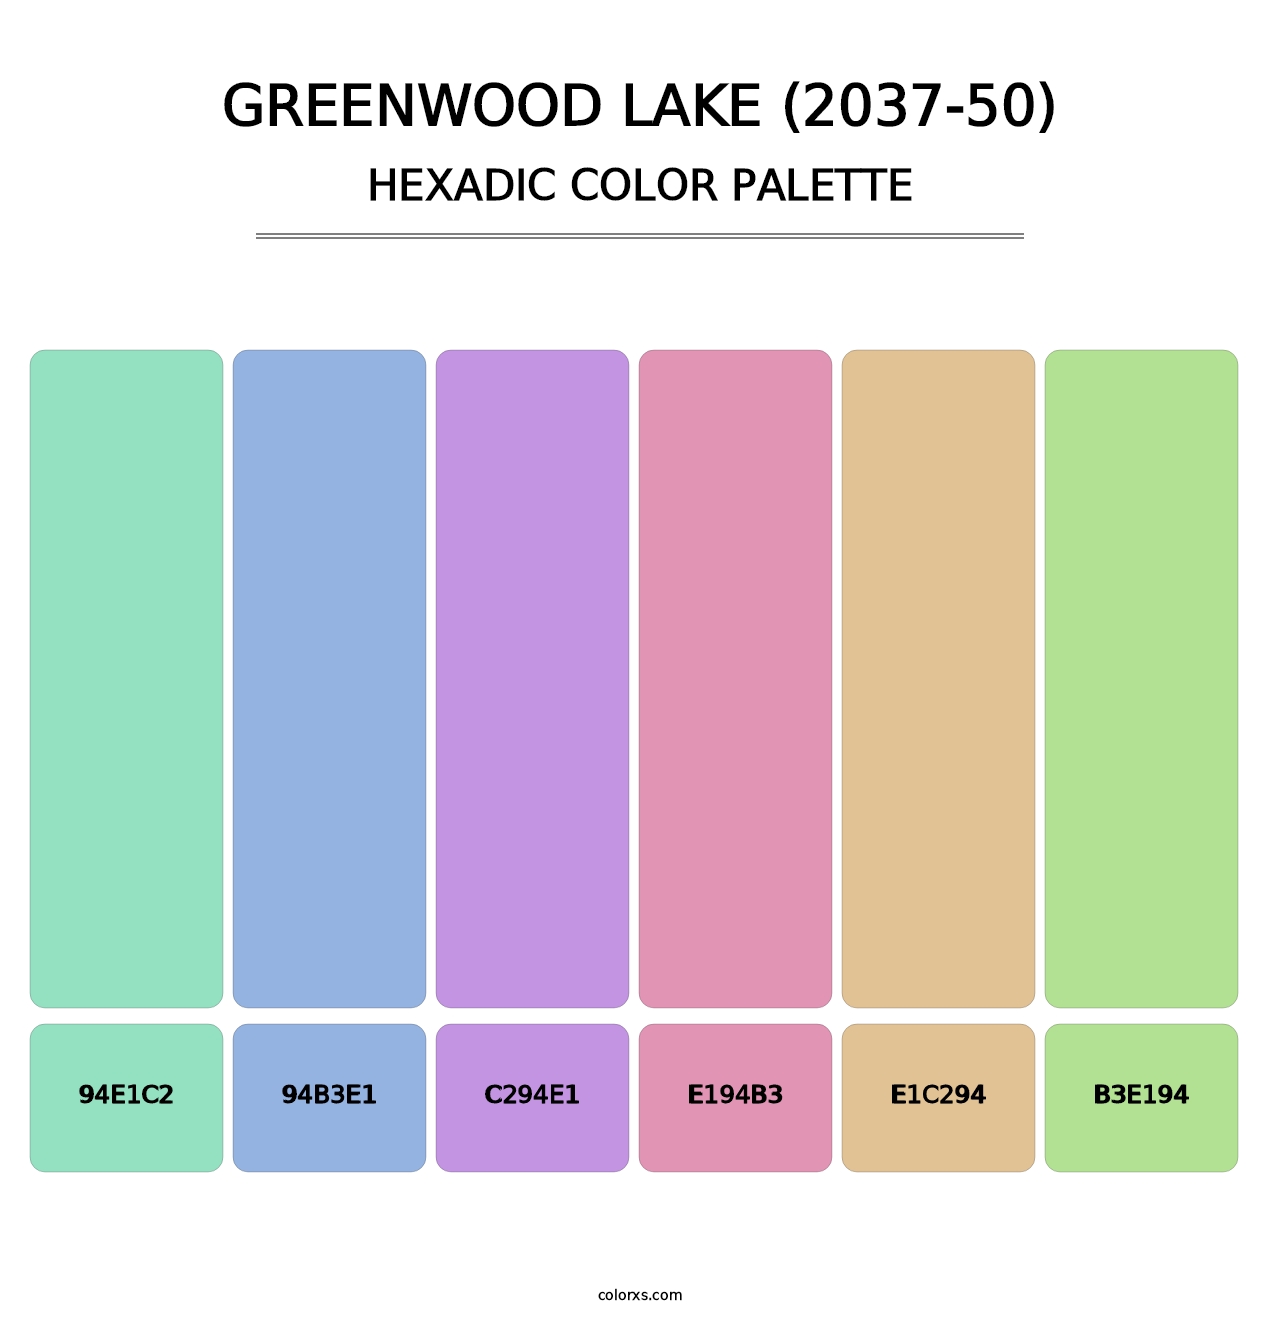 Greenwood Lake (2037-50) - Hexadic Color Palette